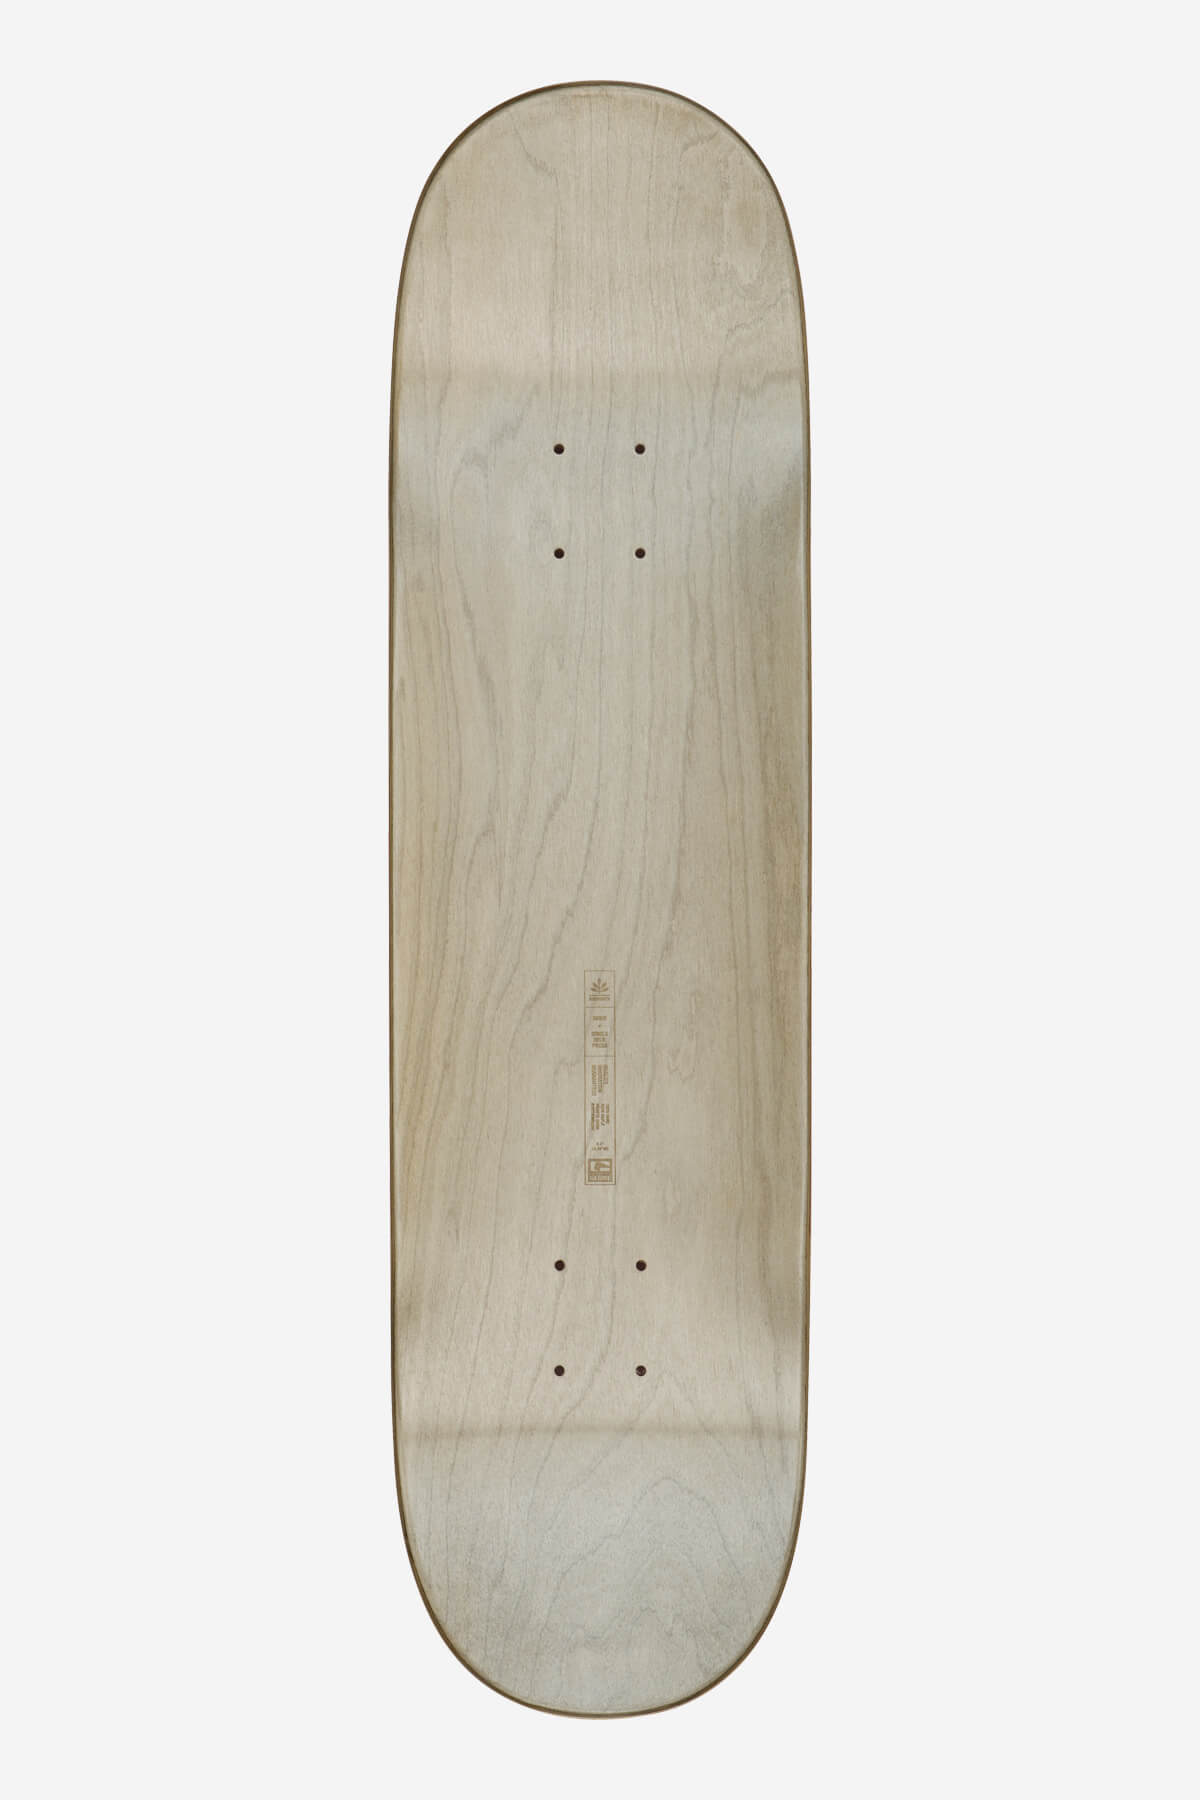 Globe - Goodstock - Rubí - 8,5 Skateboard Deck